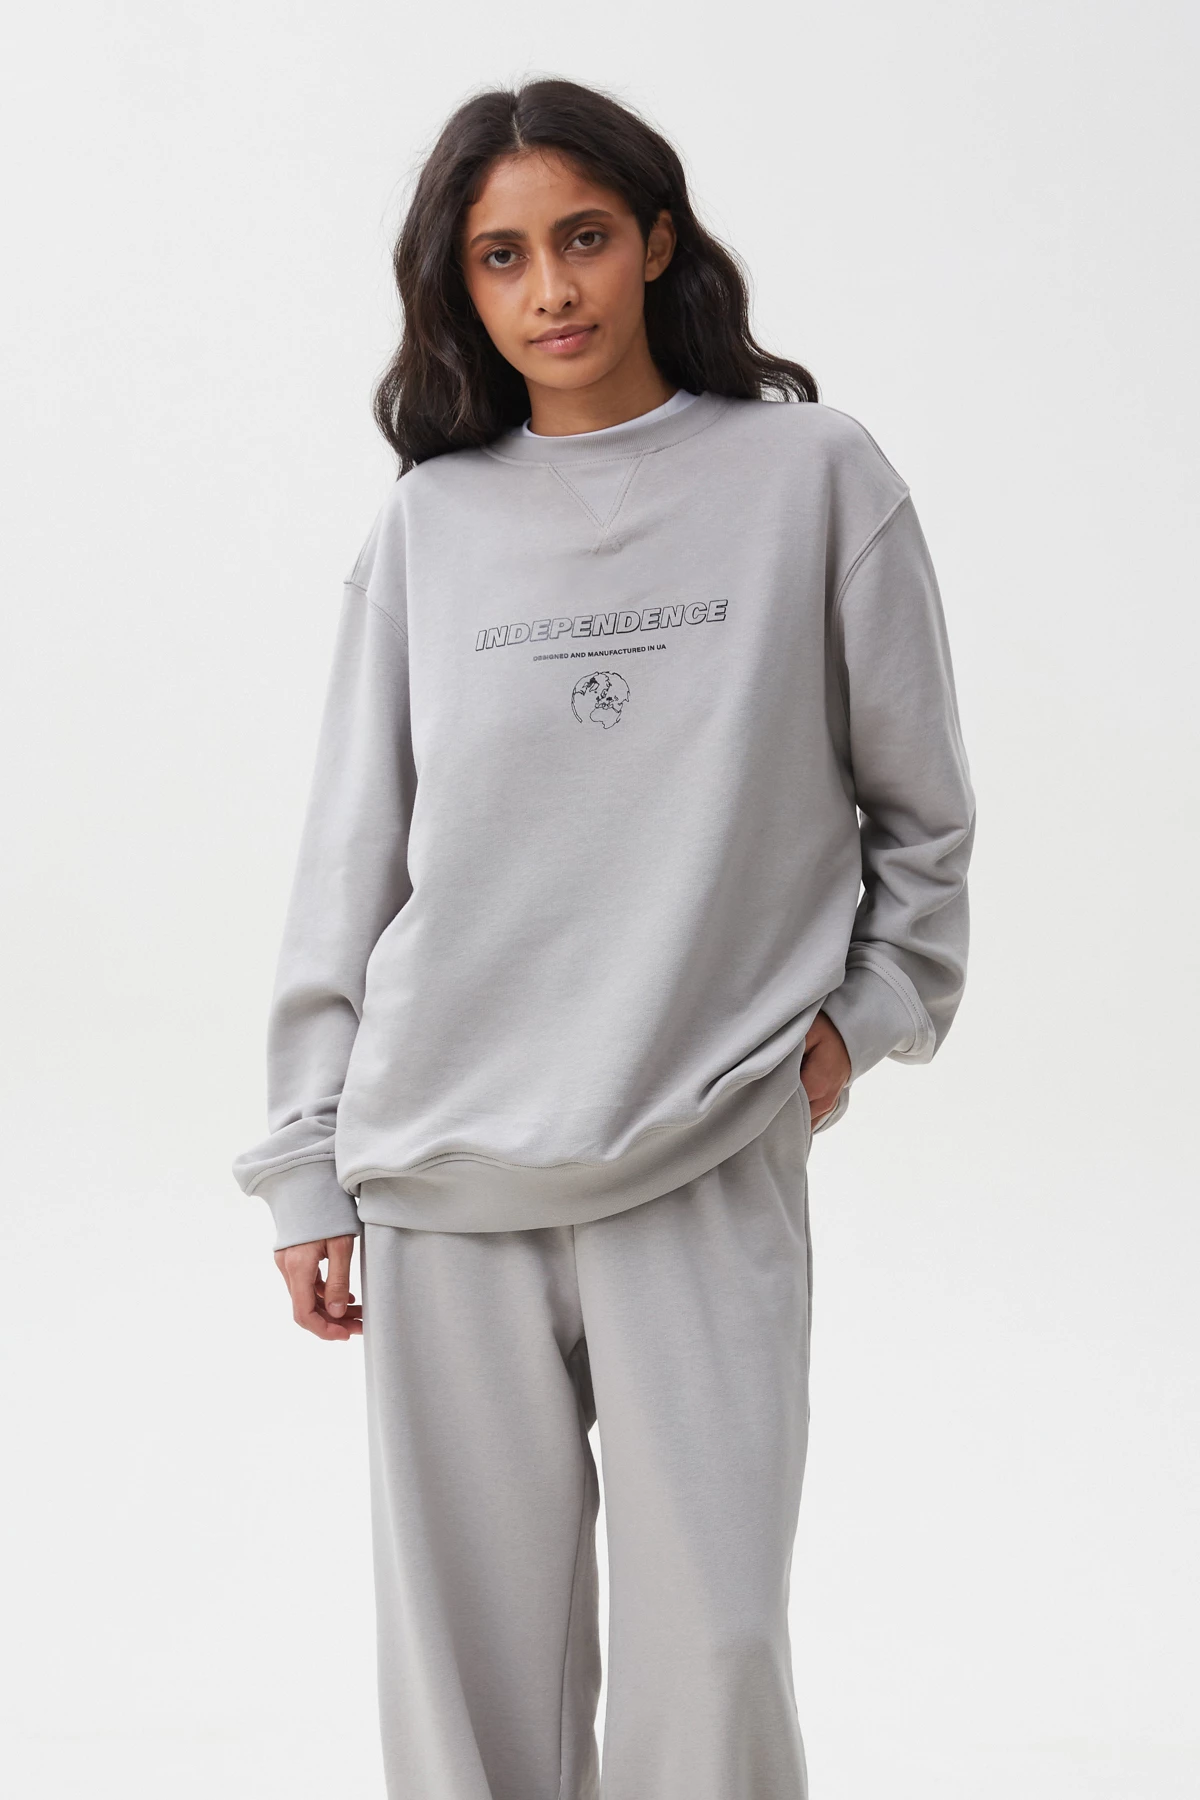 Grey unisex sweatshirt with "Independence" print, photo 1